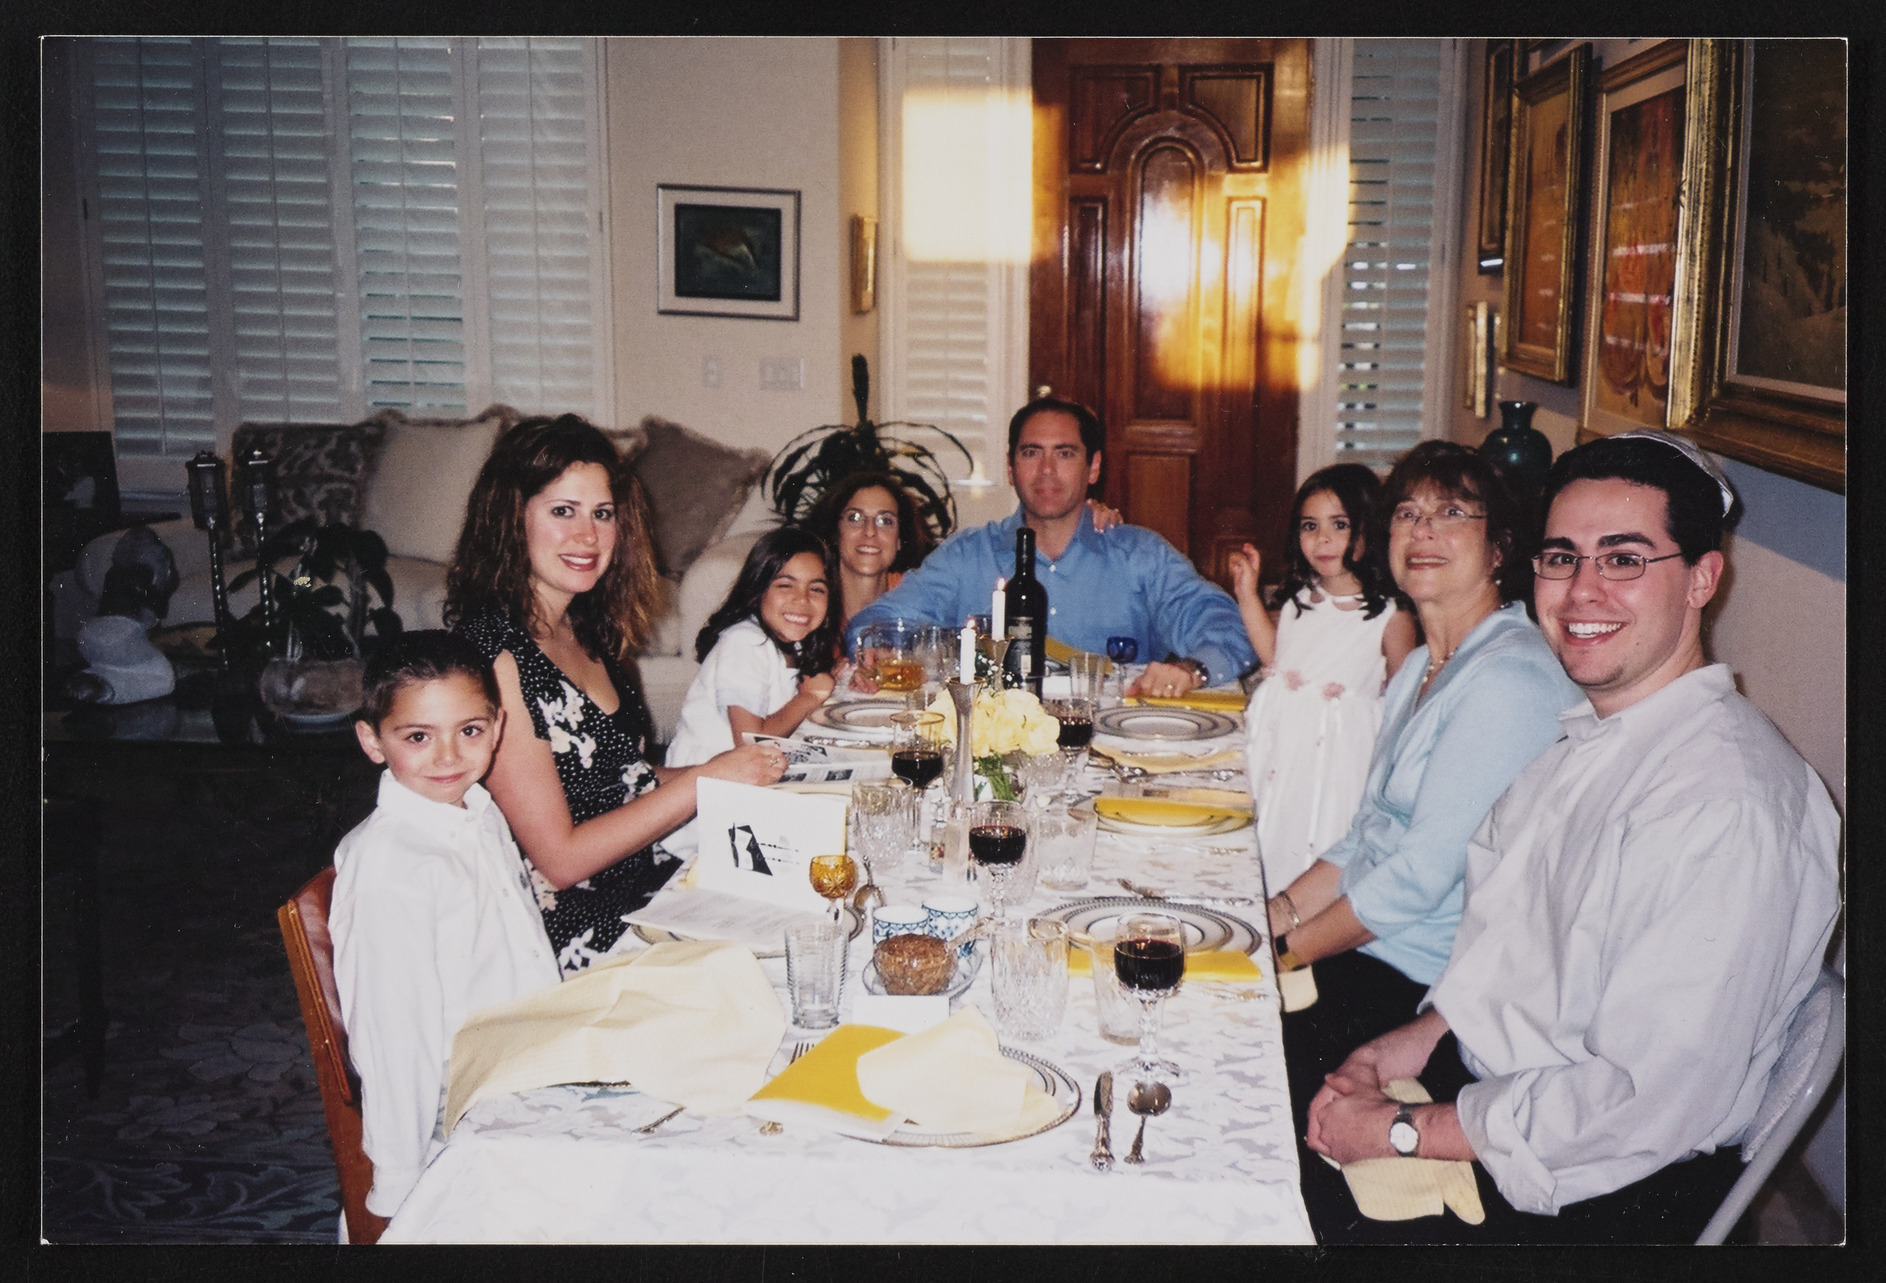 Mason Family, image 03, 2003